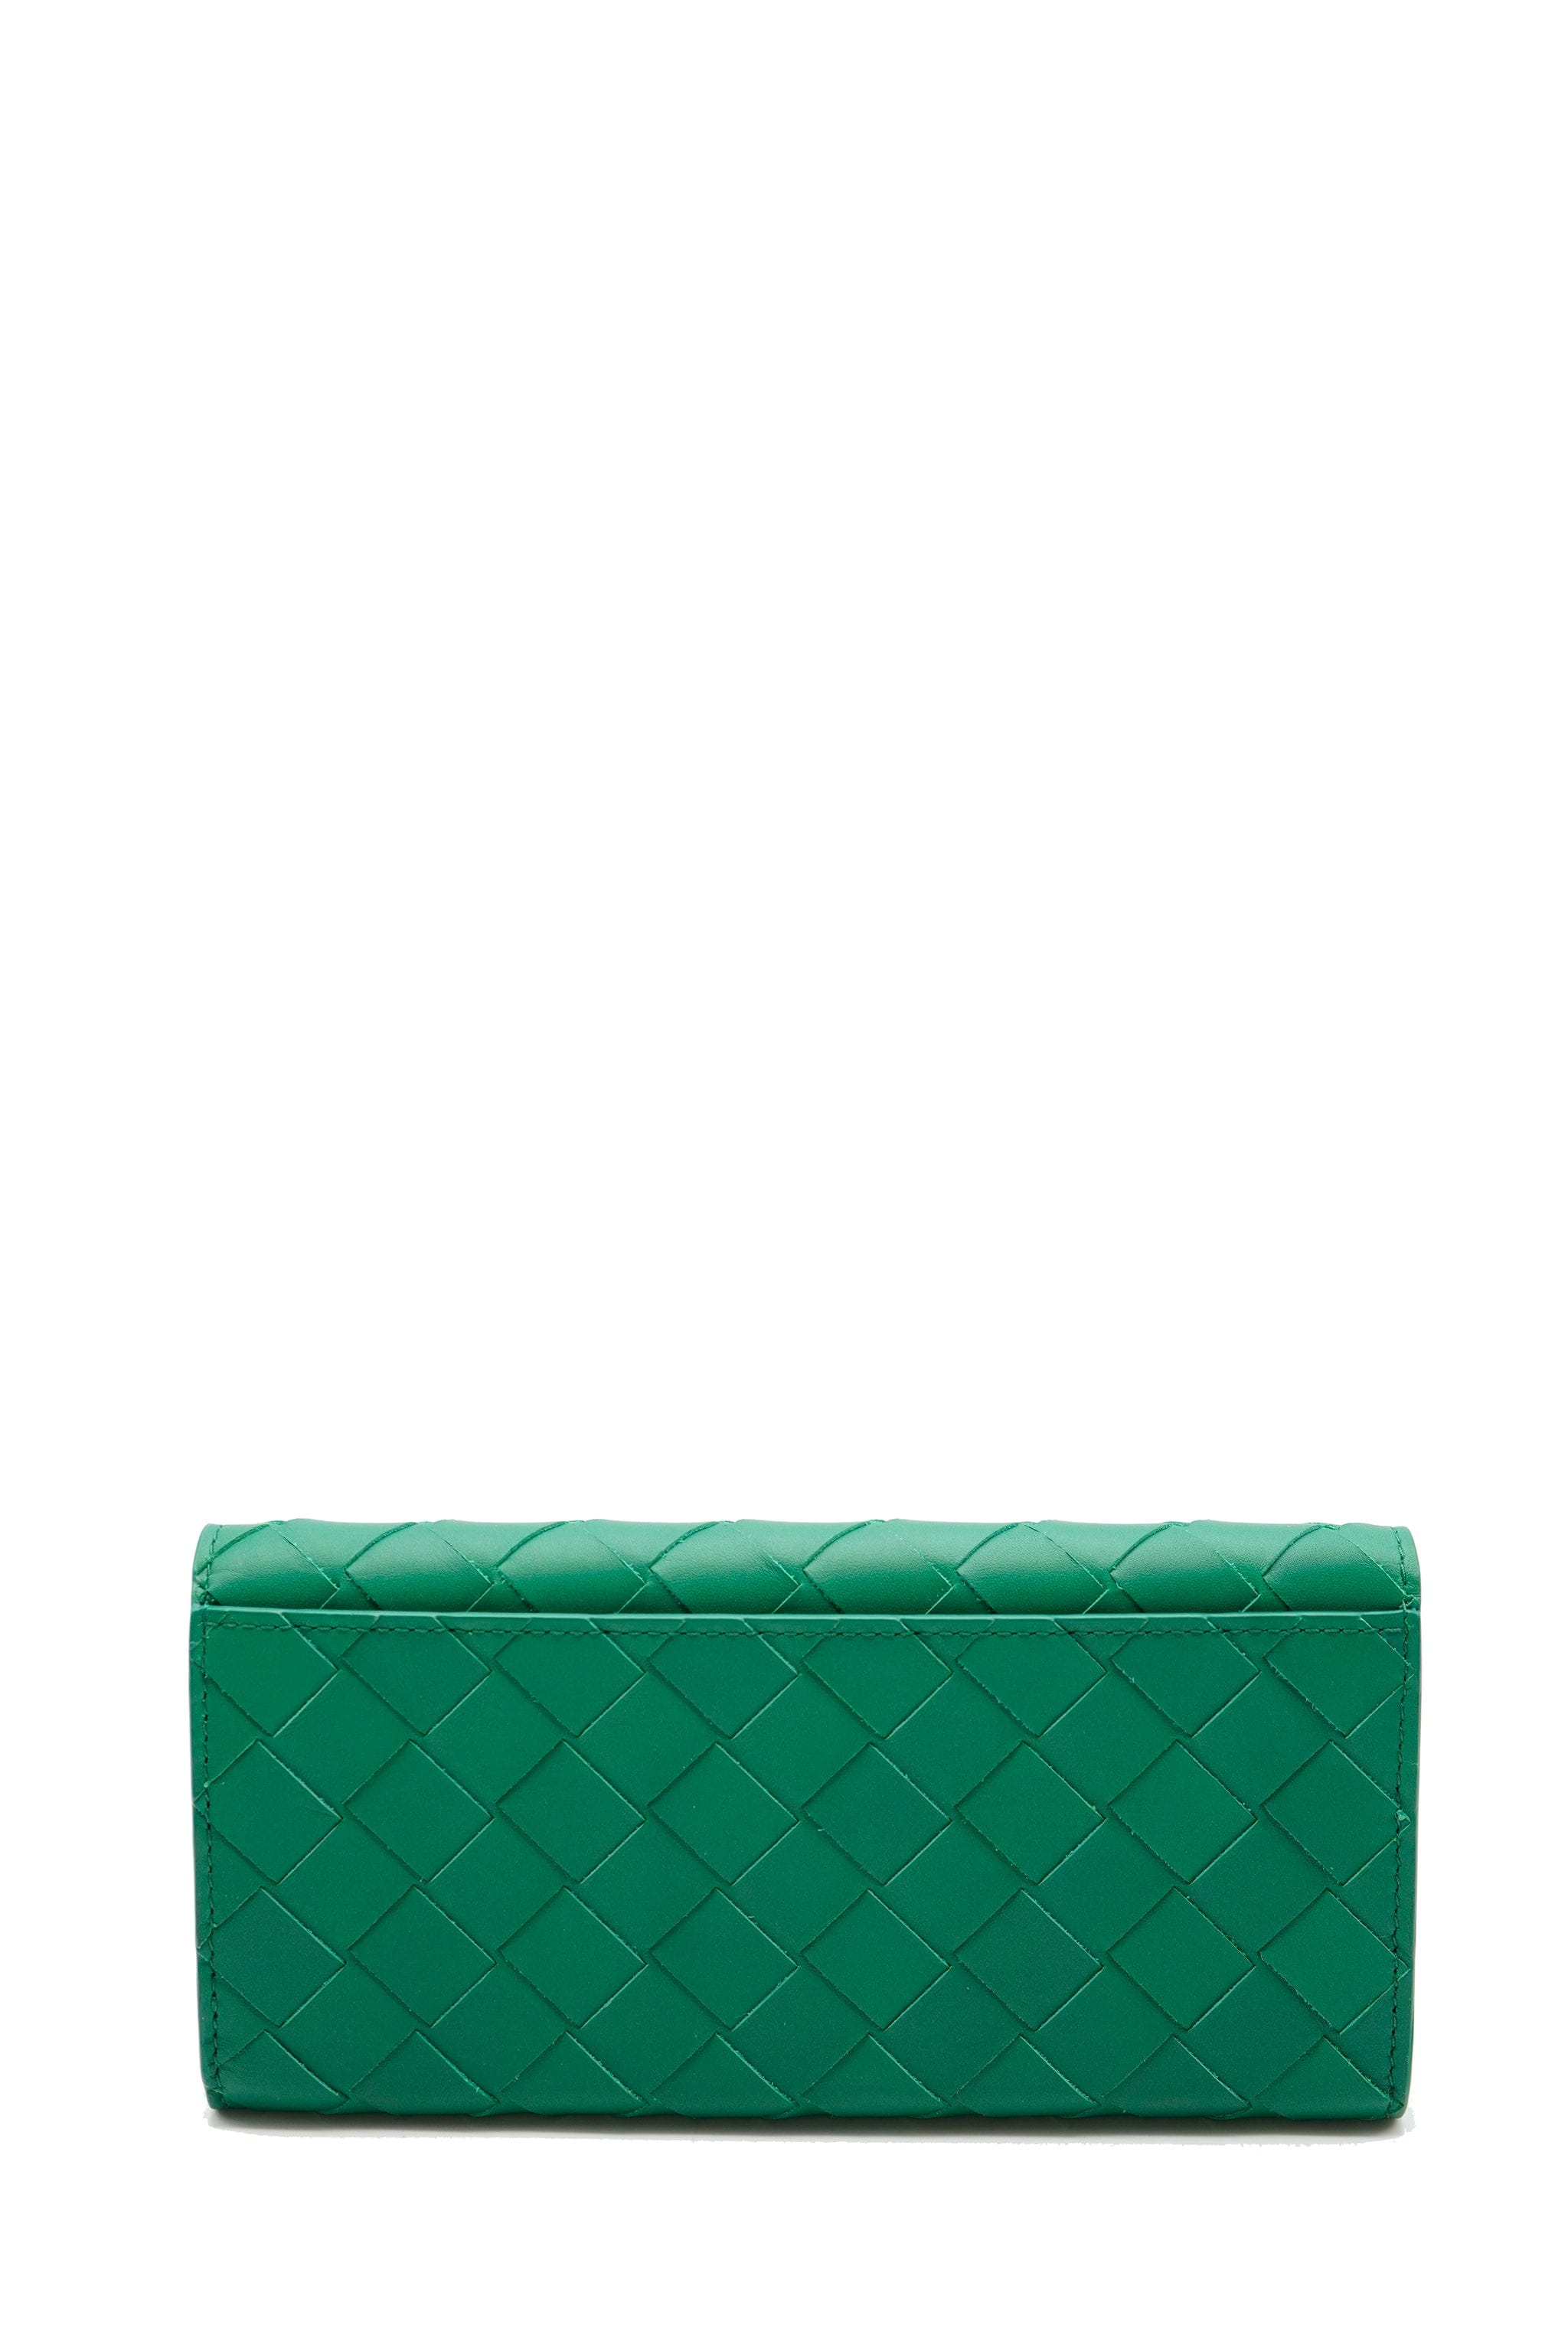 Bottega Bottega green long wallet ASL5539